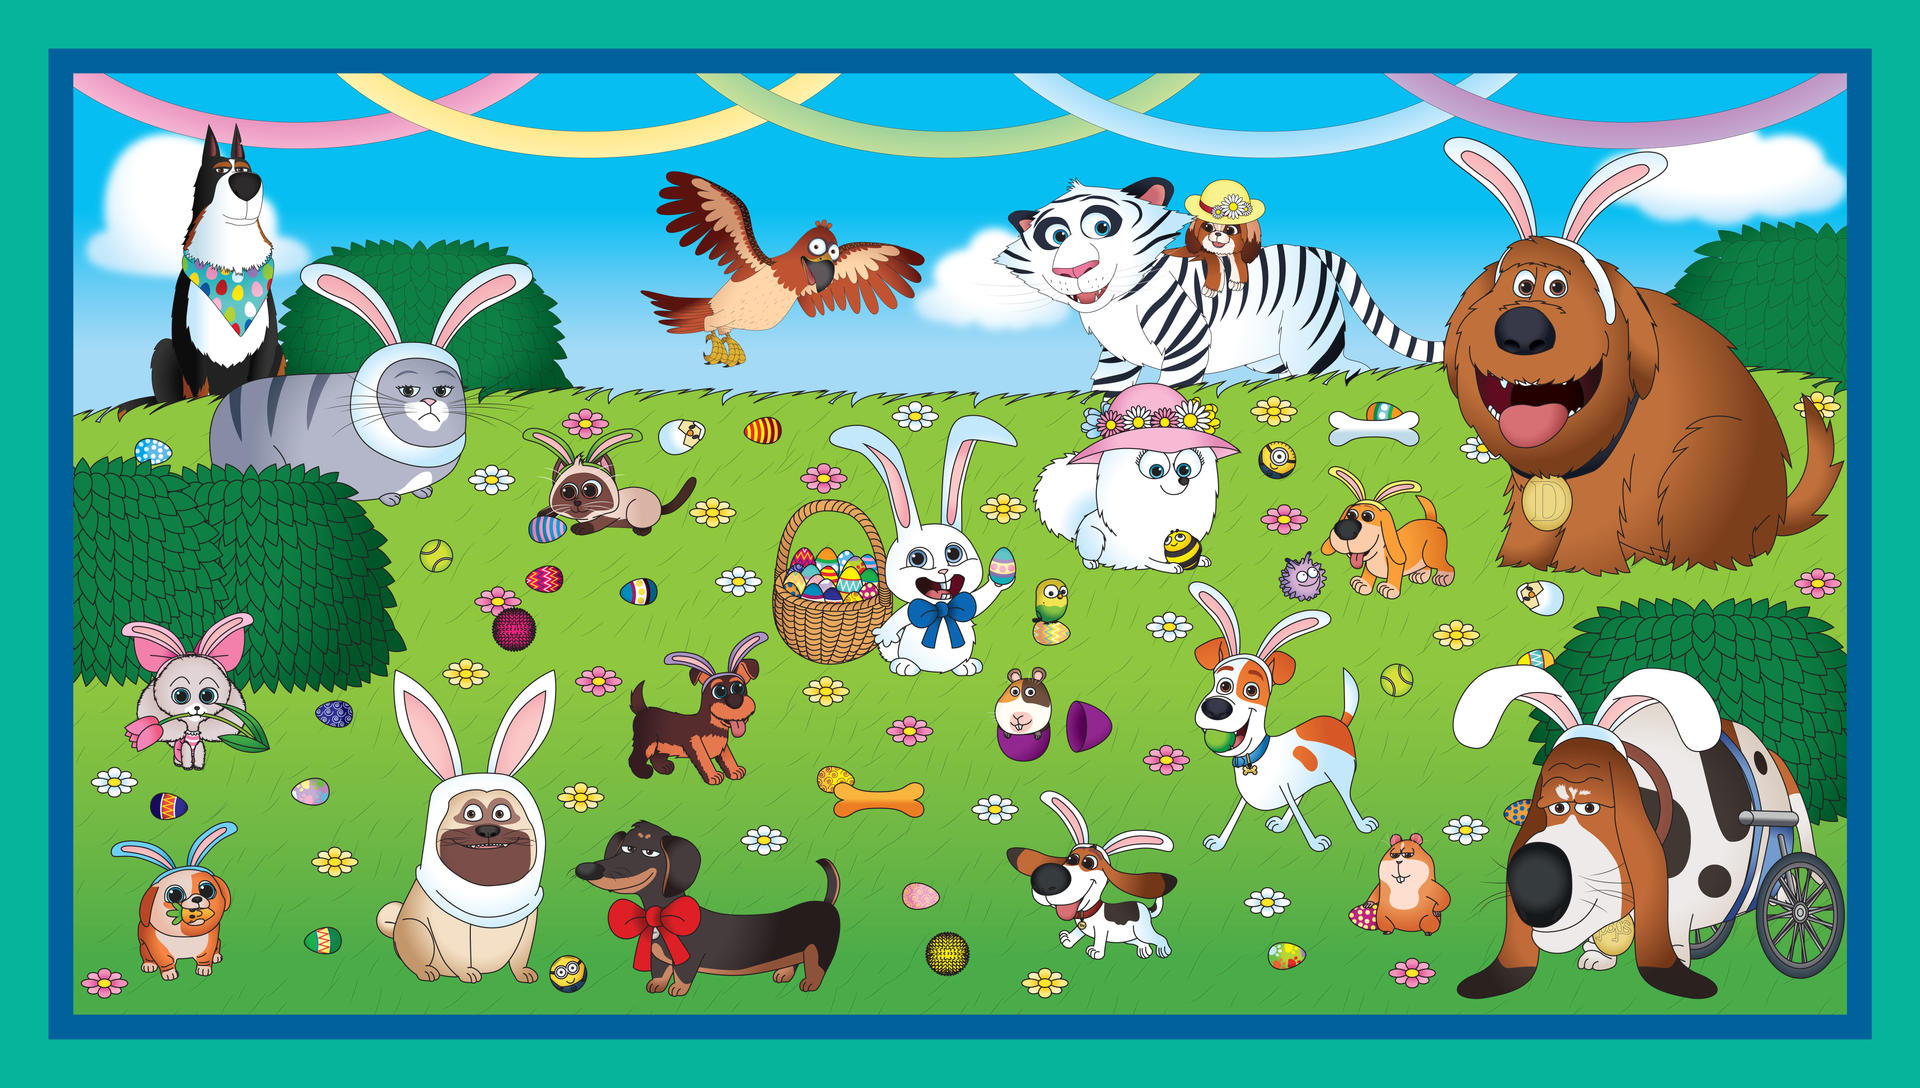 Happy Easter egg 2023 Grinchivaniya Rabbit Killer by AlinaWerewolf on  DeviantArt